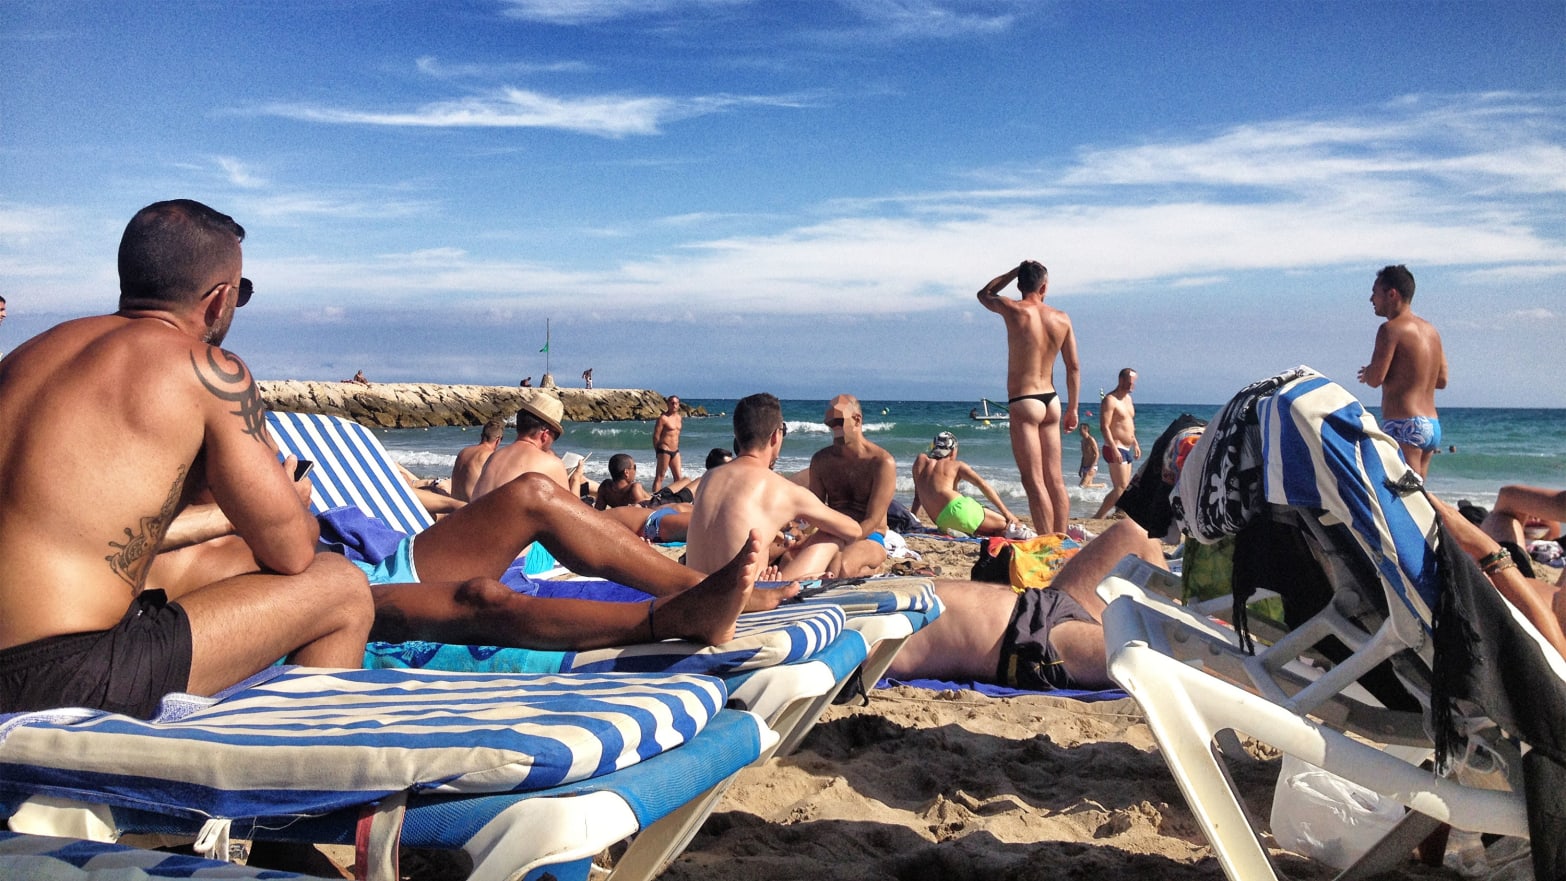 Male Beach Sex - Balmins: Best Nude Beach in the World